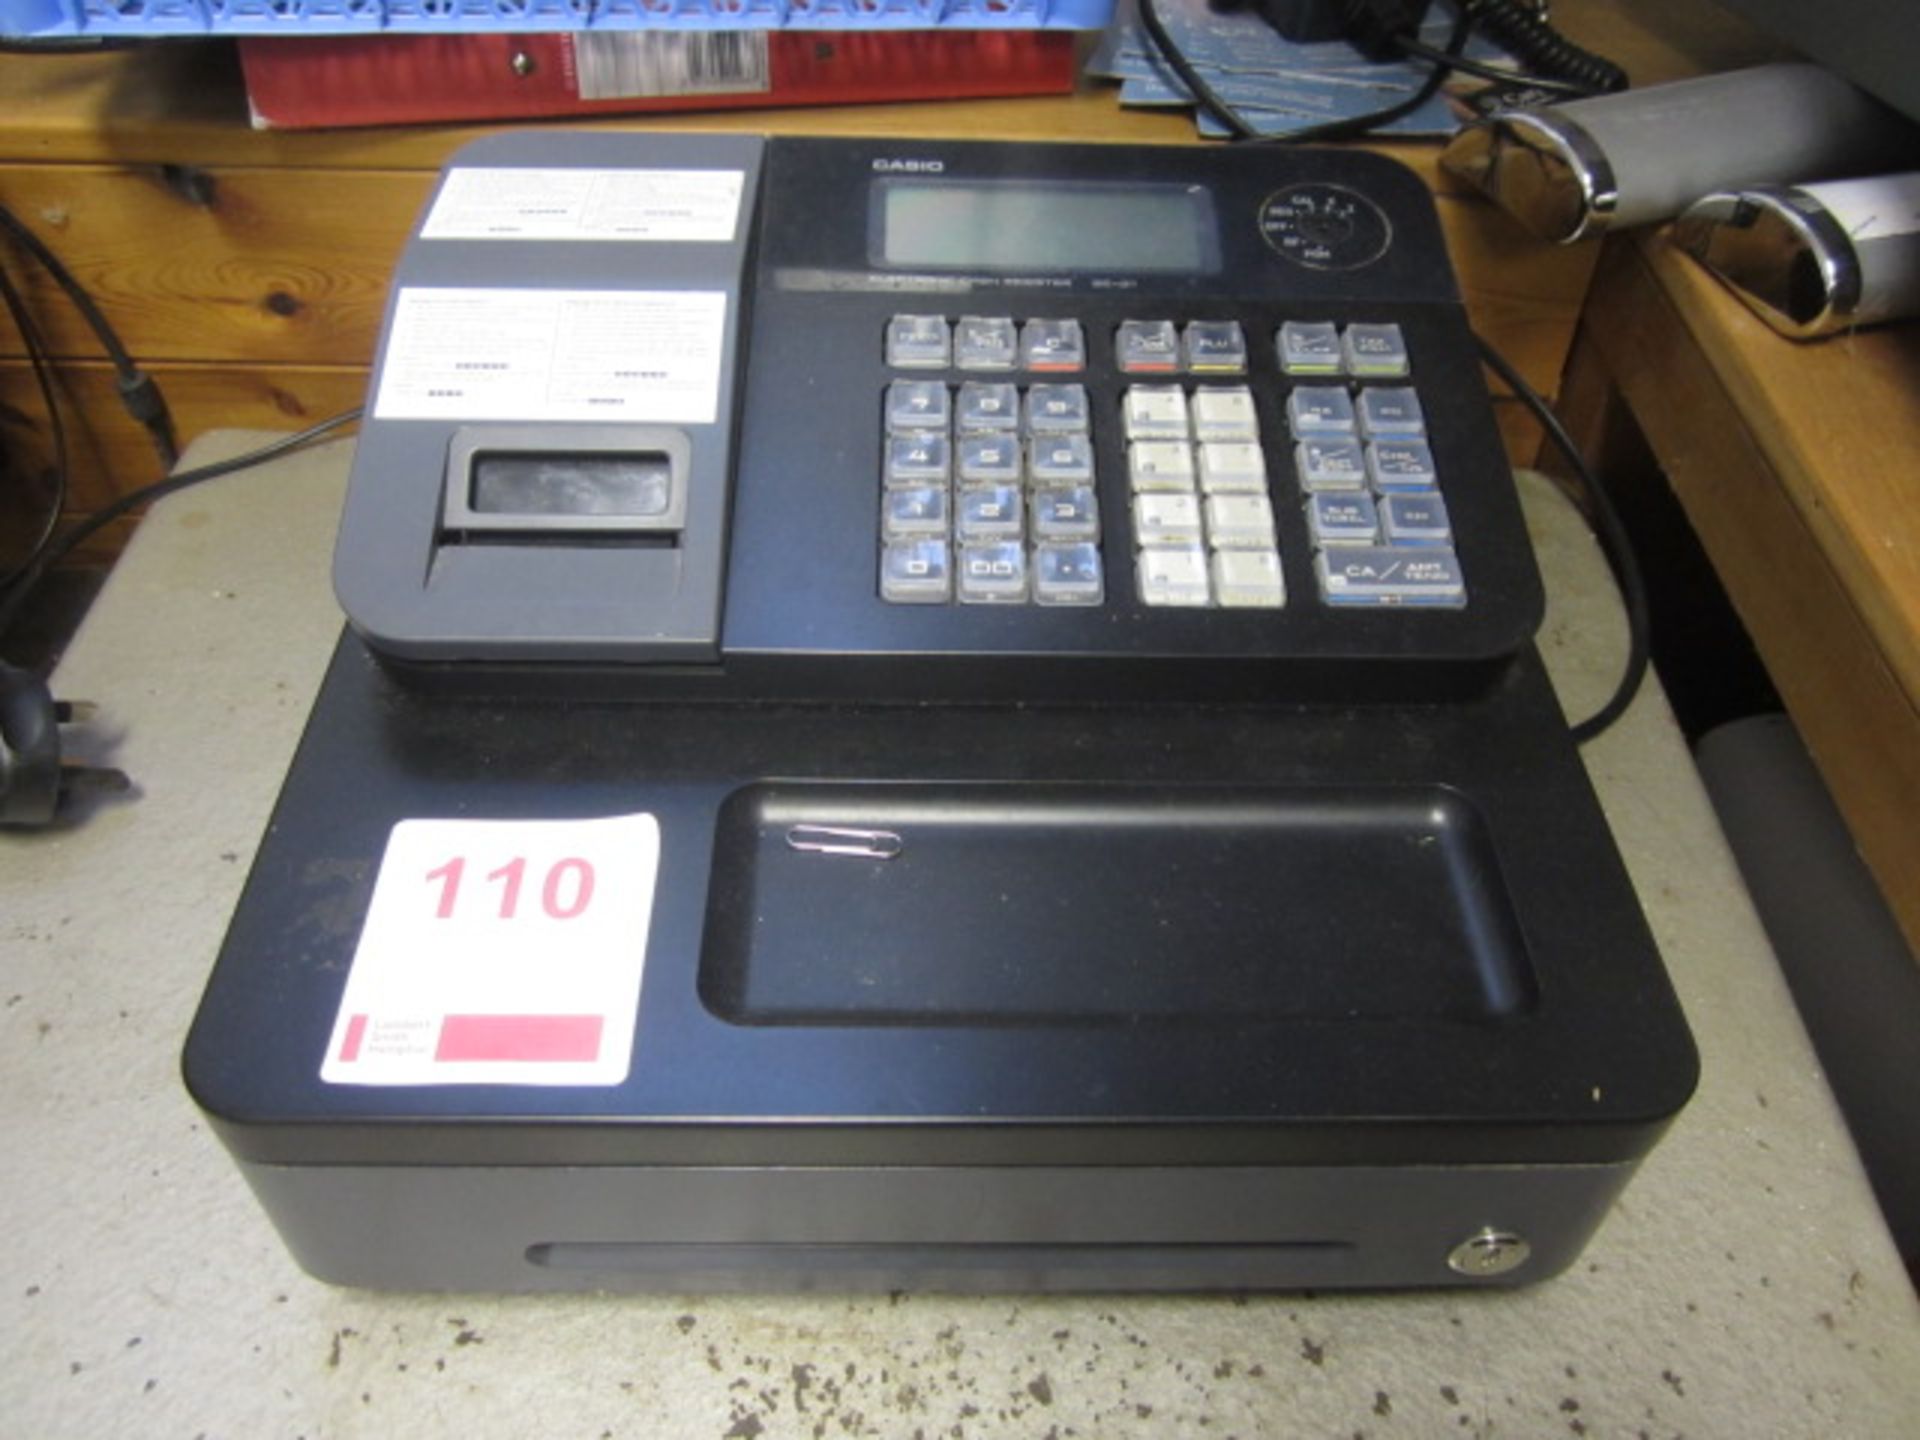 Casio SE-G1 electronic cash register